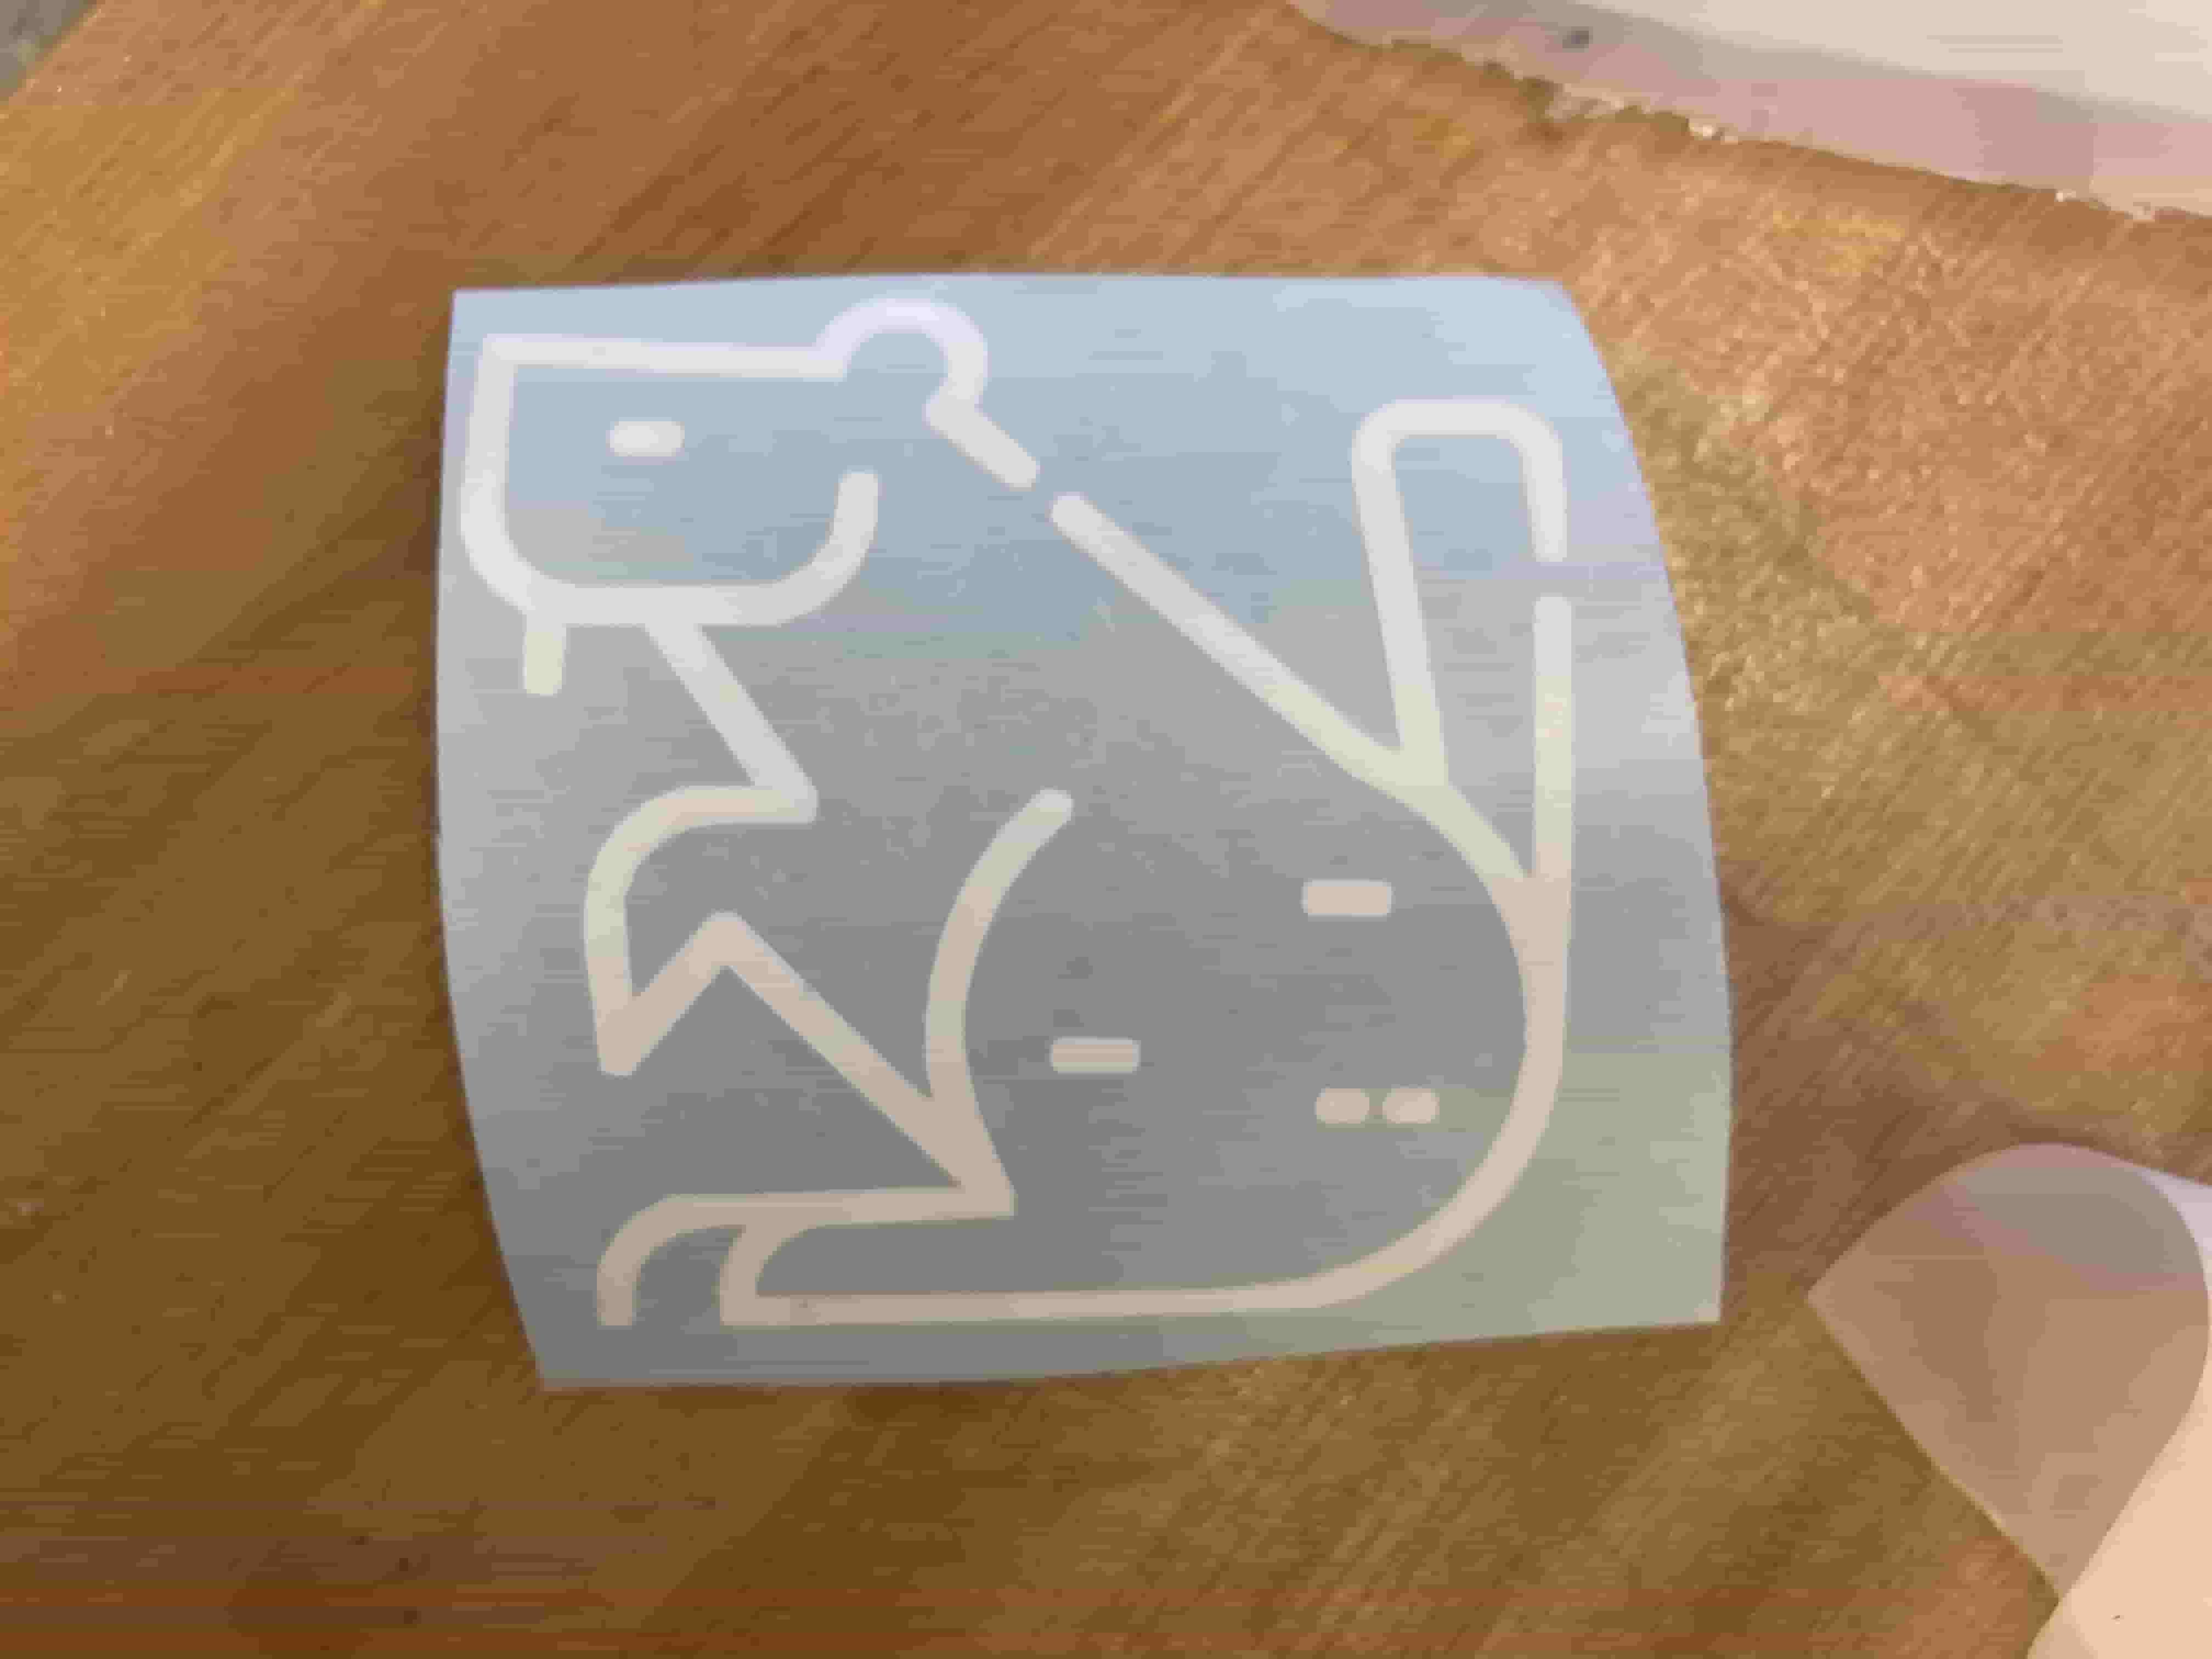 A beaver shaped vinyl sticker